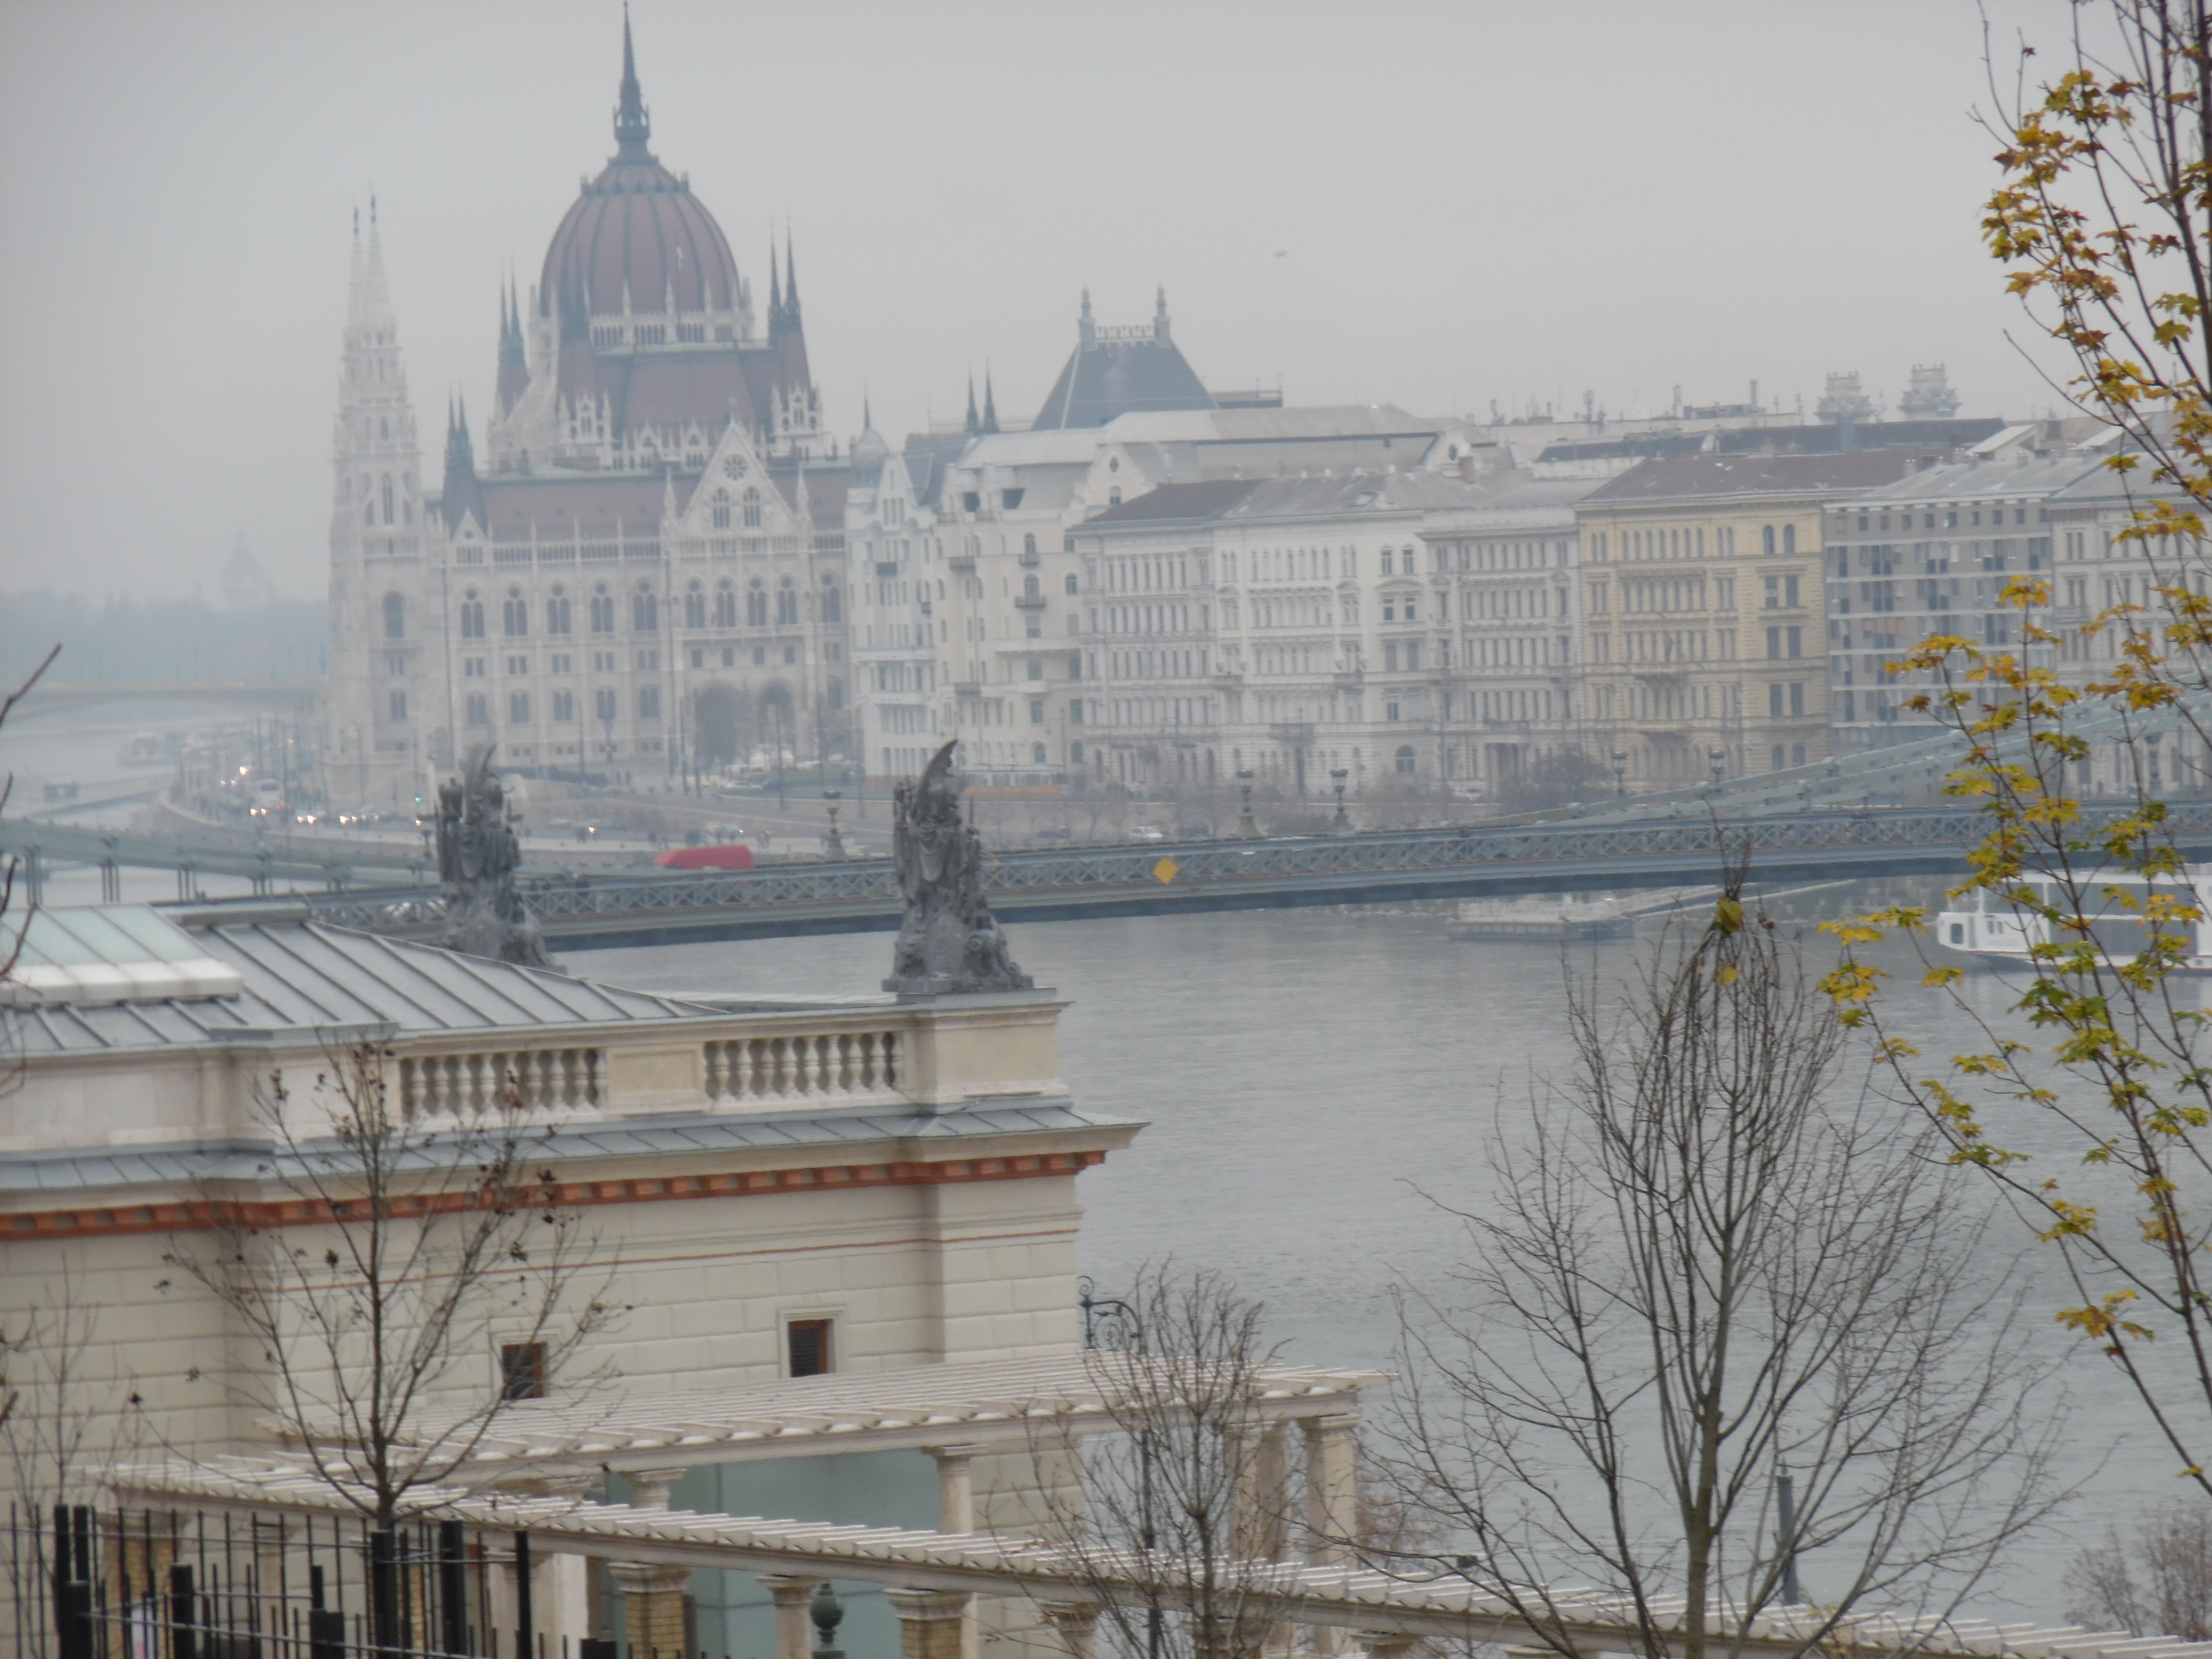 Visit the Hungarian Parliament building